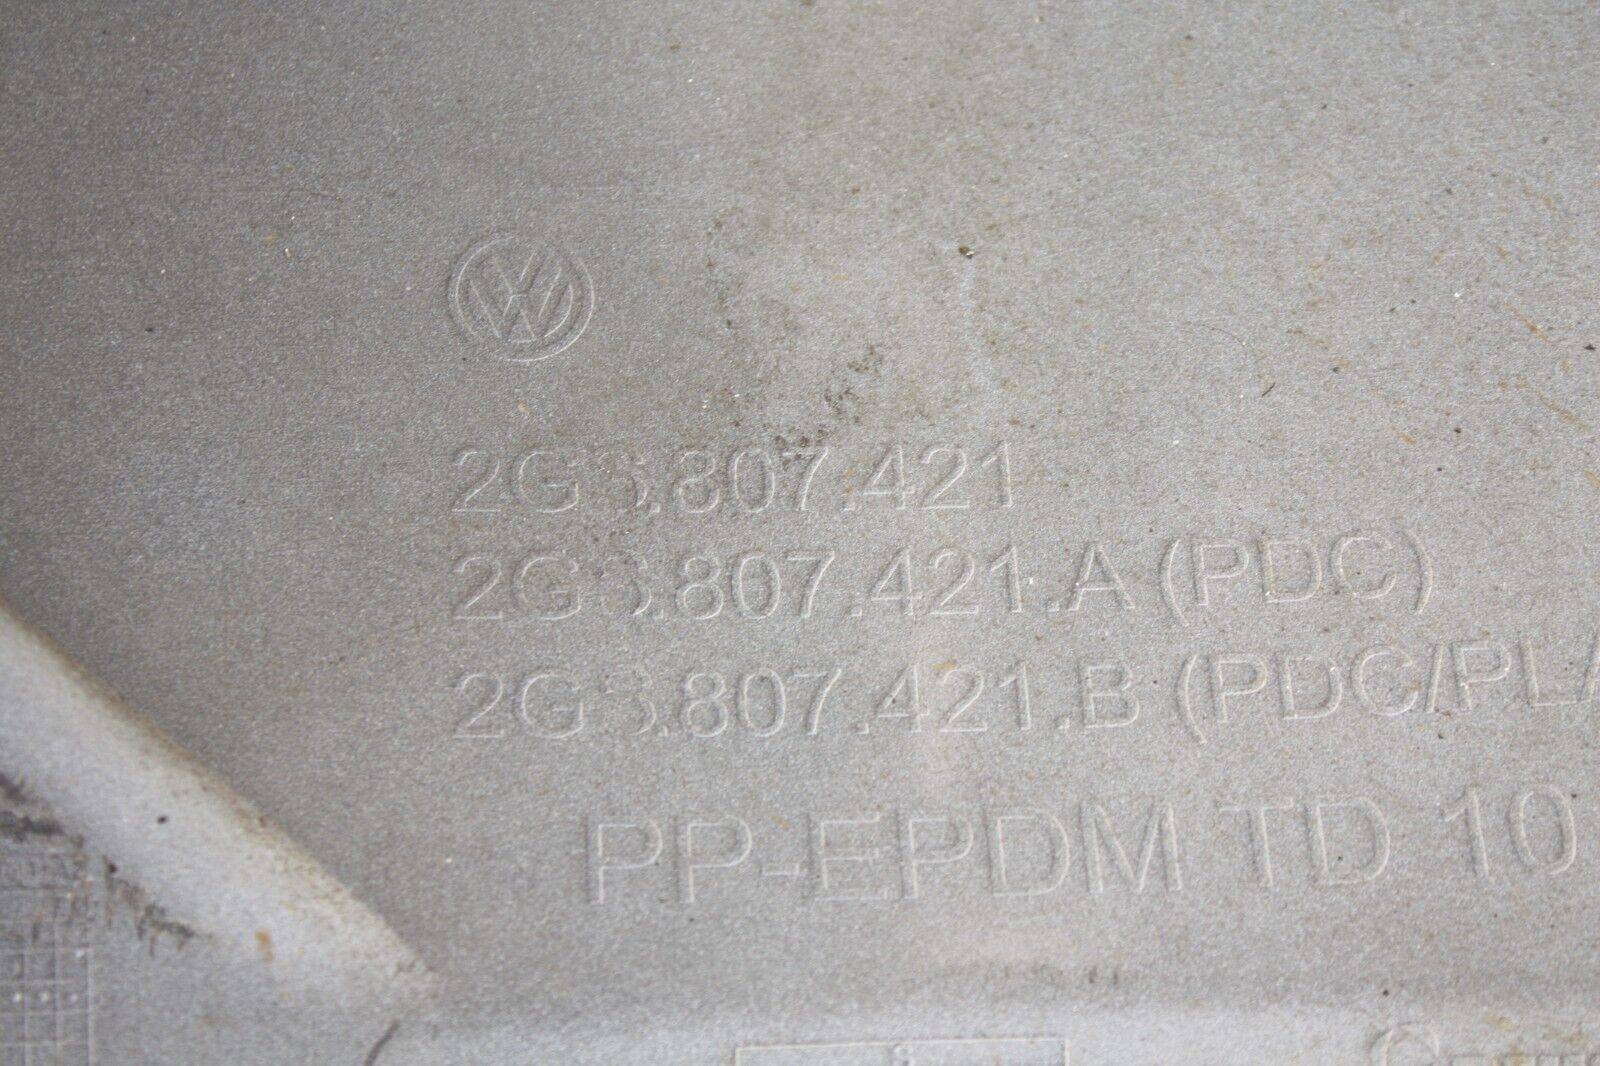 VW-Polo-Rear-Bumper-2018-TO-2021-2GS807421-Genuine-176333550434-14